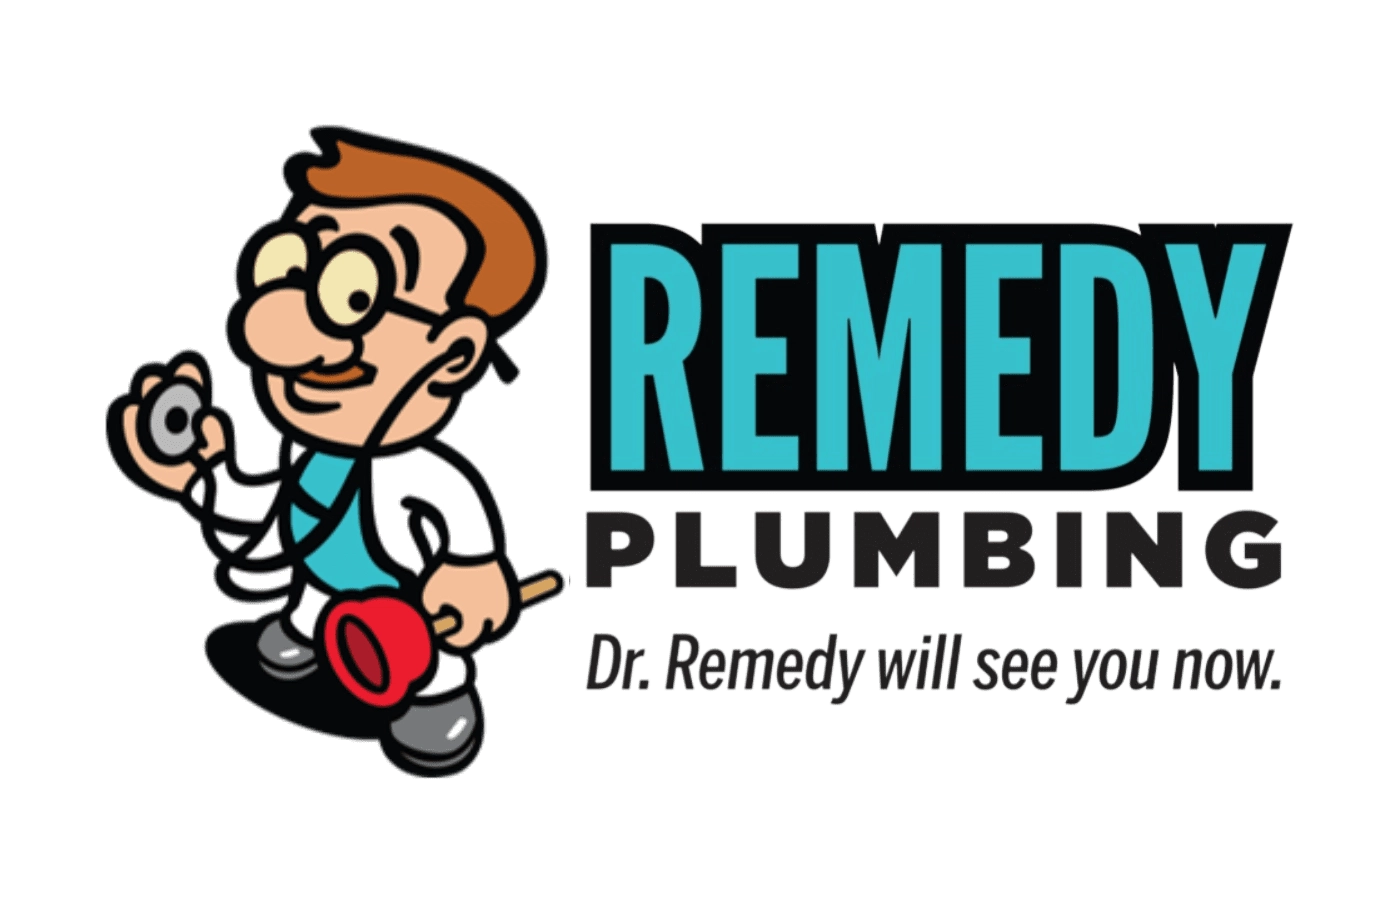 Remedy Plumbing Logo